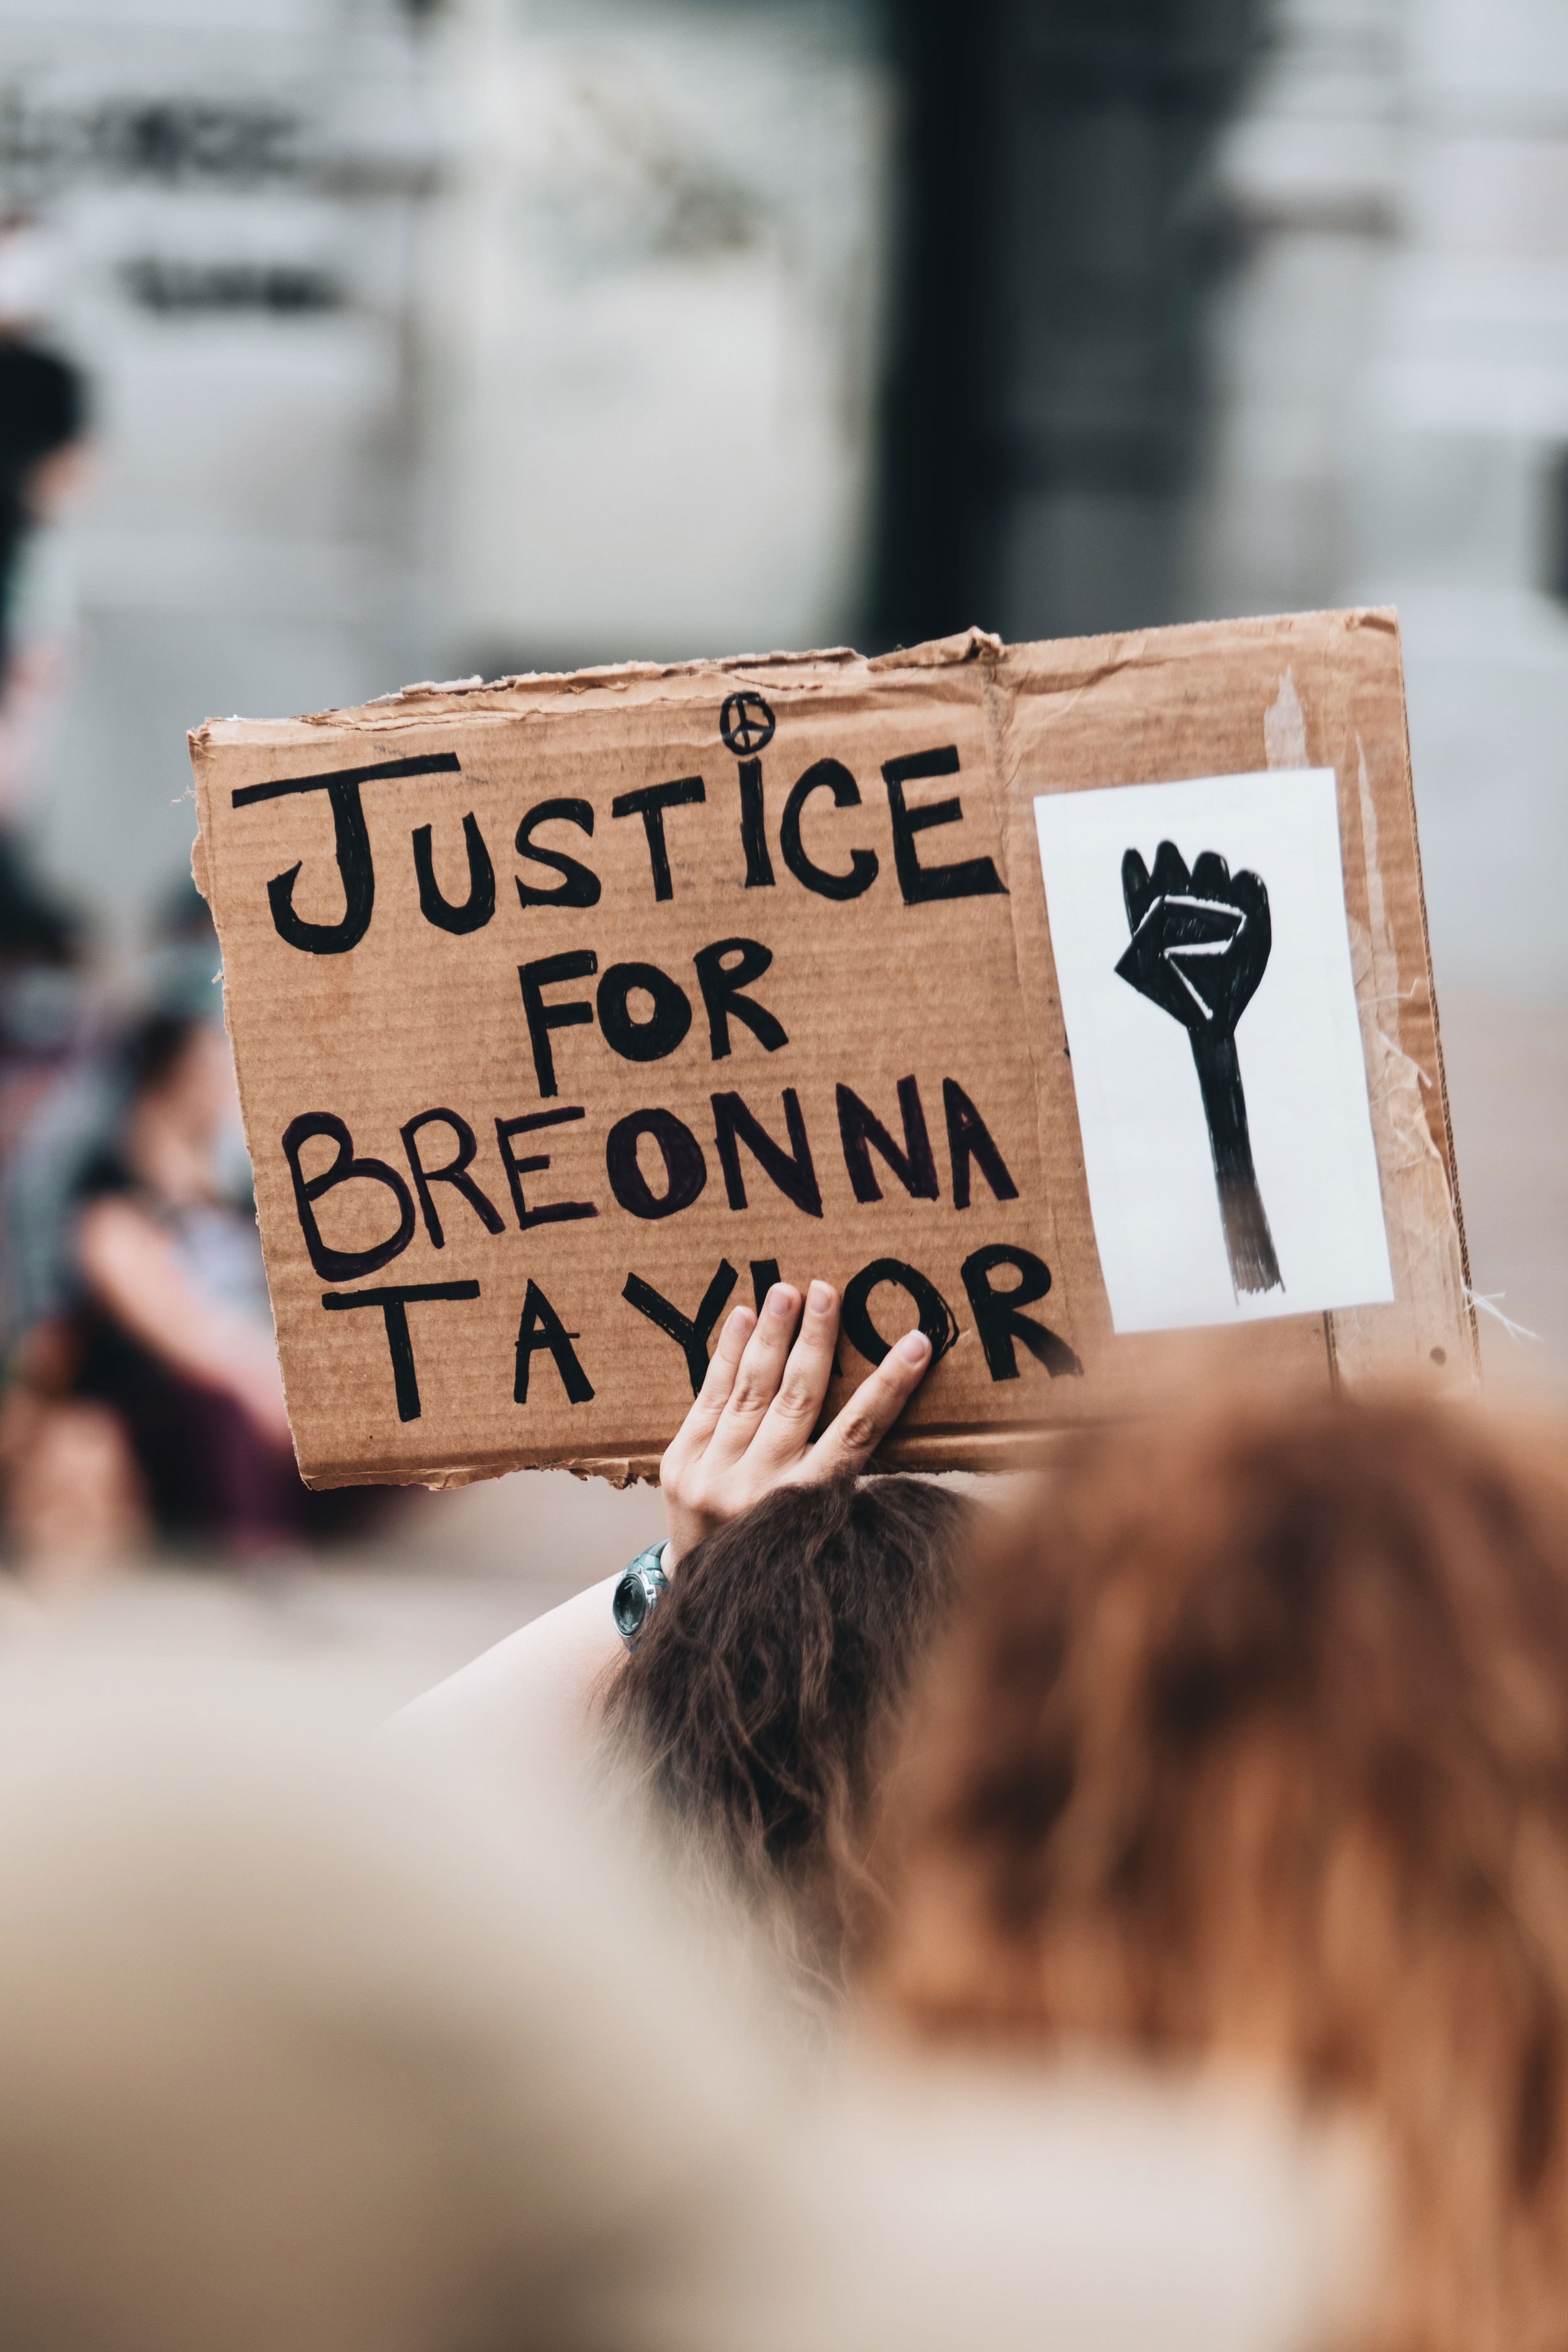 breonna taylor petition 10 million signatures second largest change.org black lives matter blm